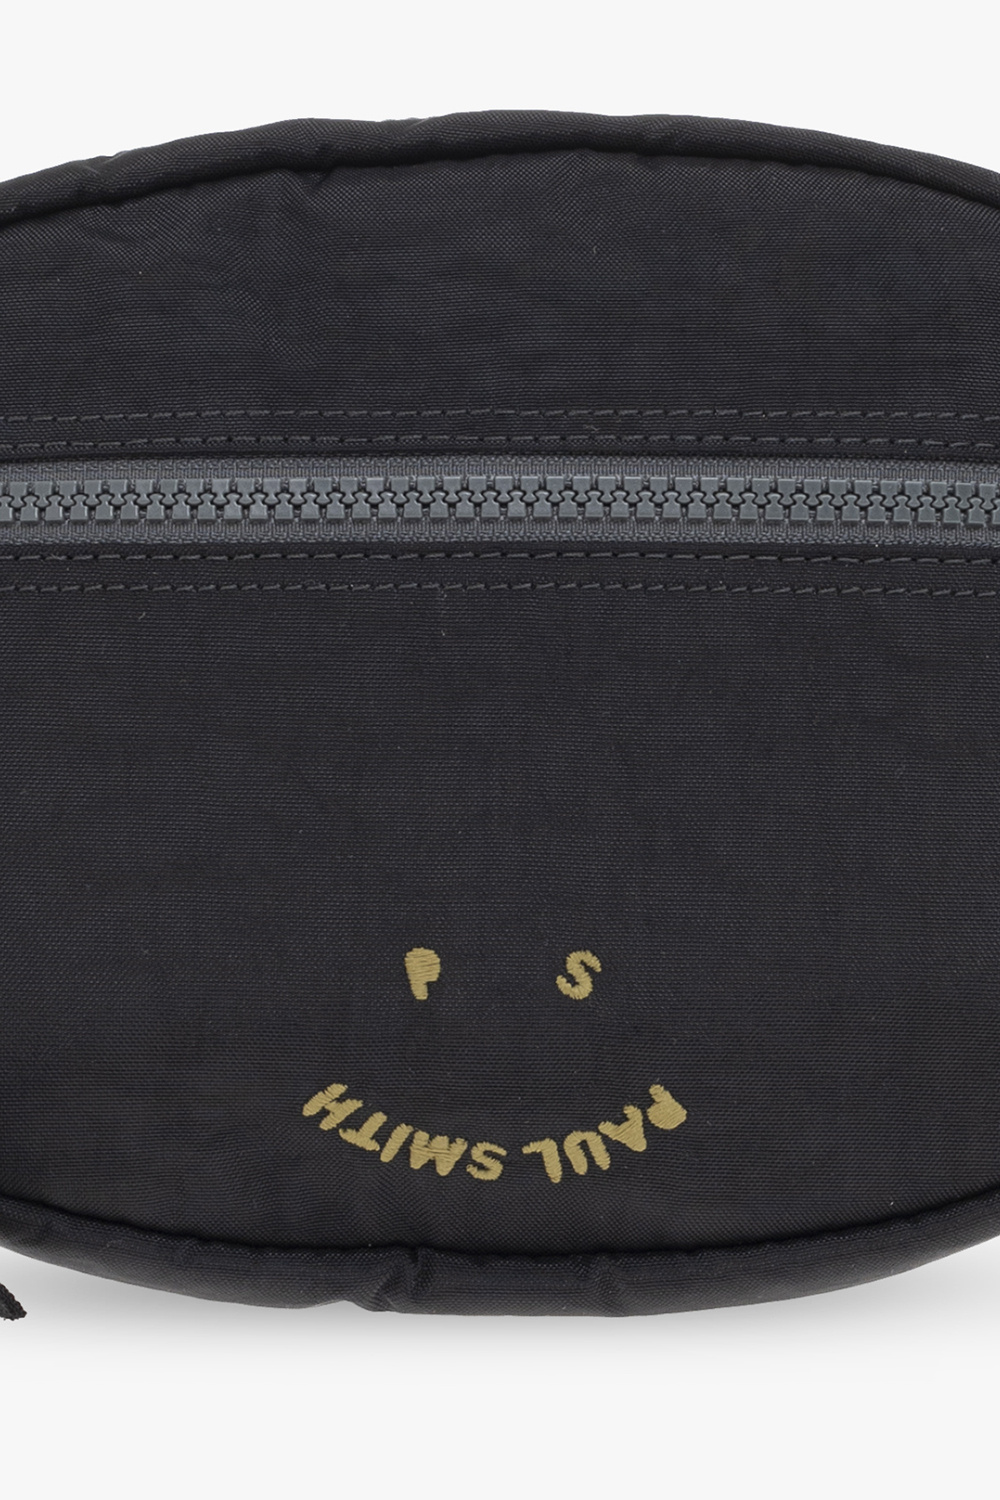 IetpShops Japan - Belt bag with logo PS Paul Smith - Stars really